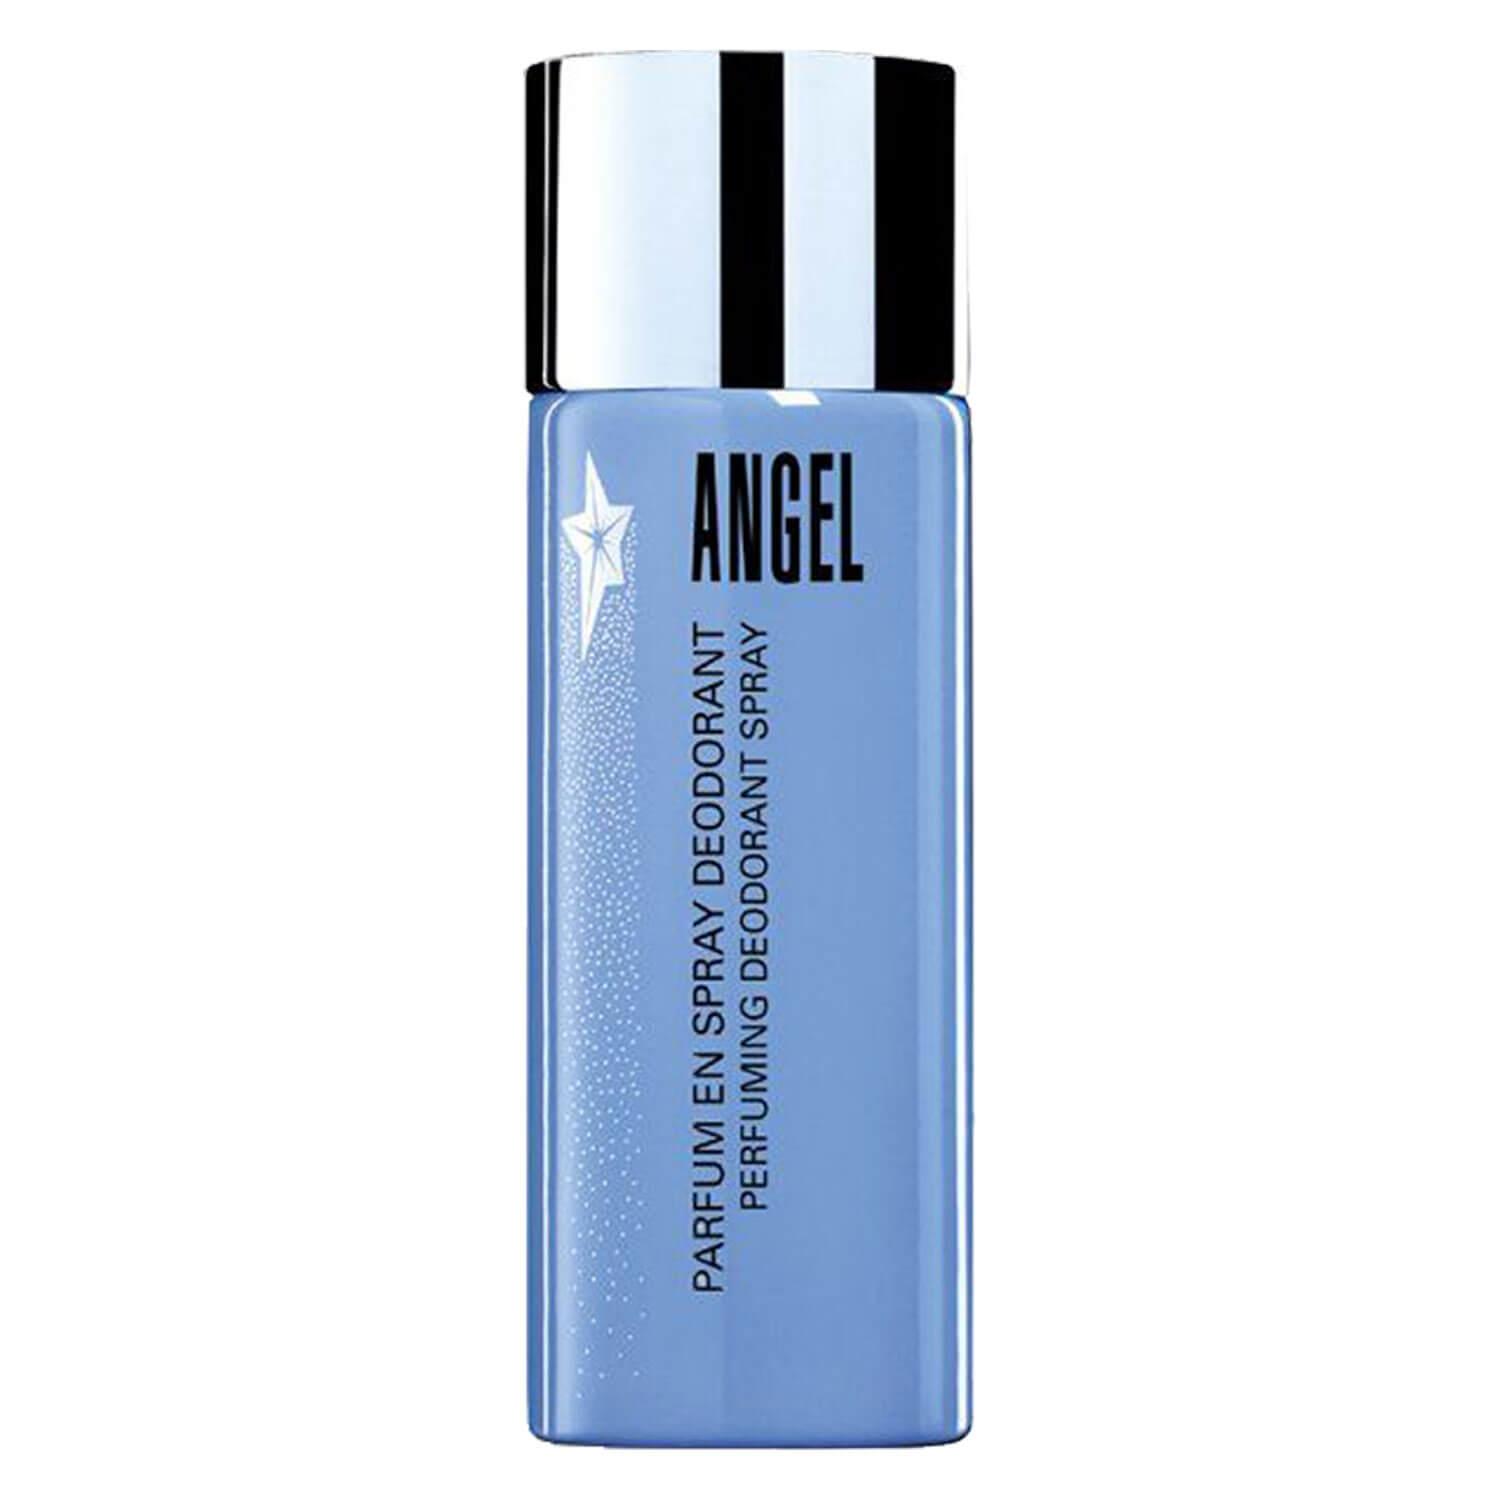 Angel - Angel Deodorant Spray